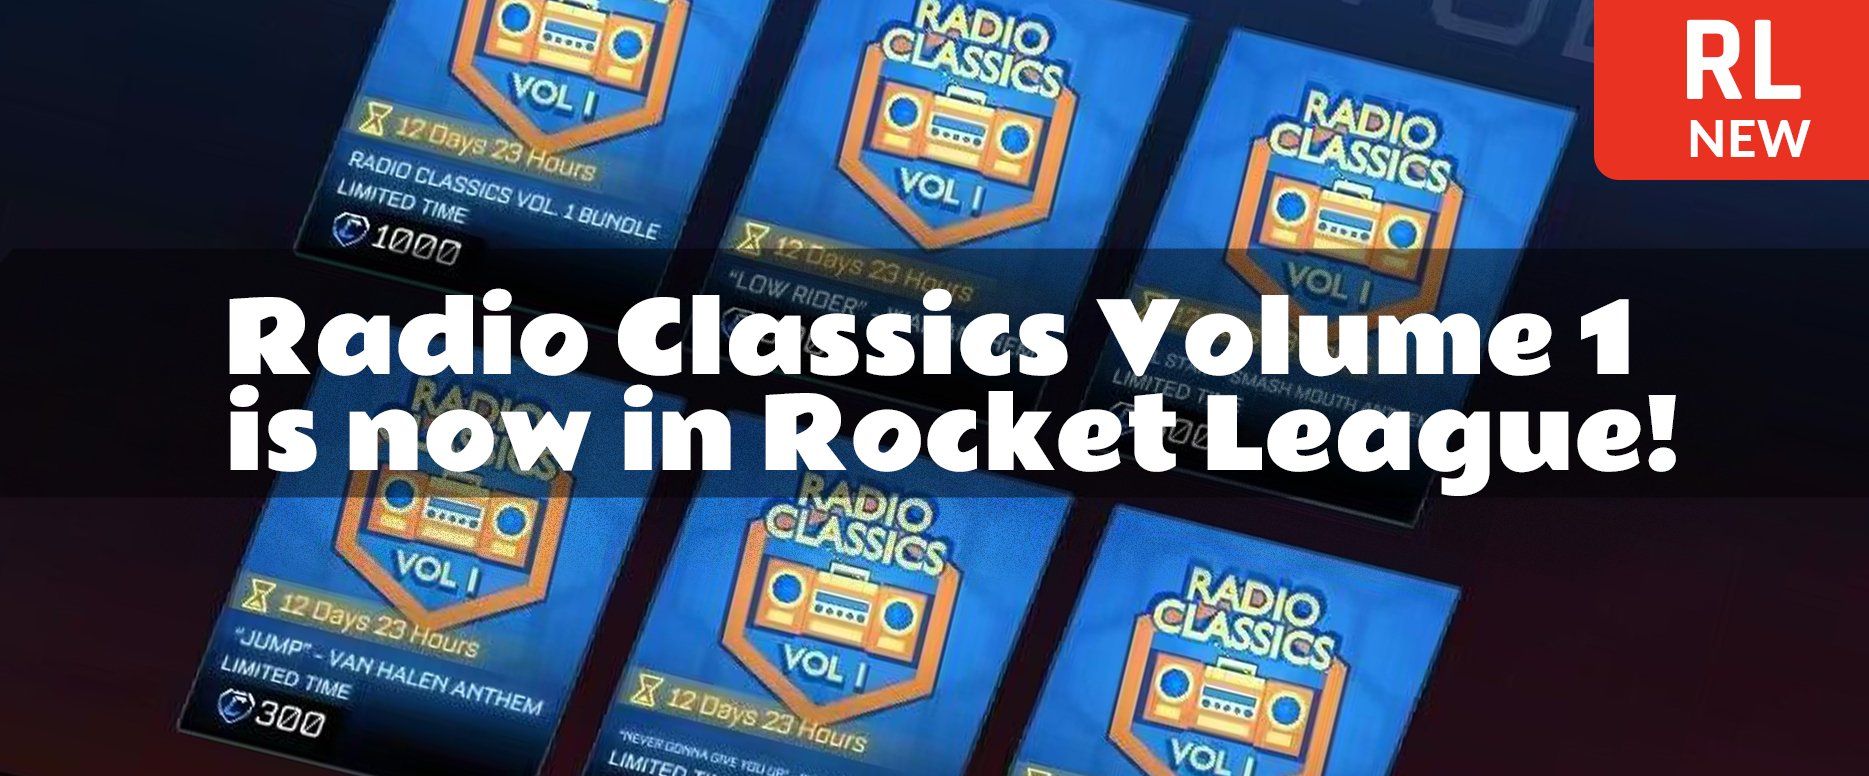 Radio Classics Volume 1 is now in Rocket League!